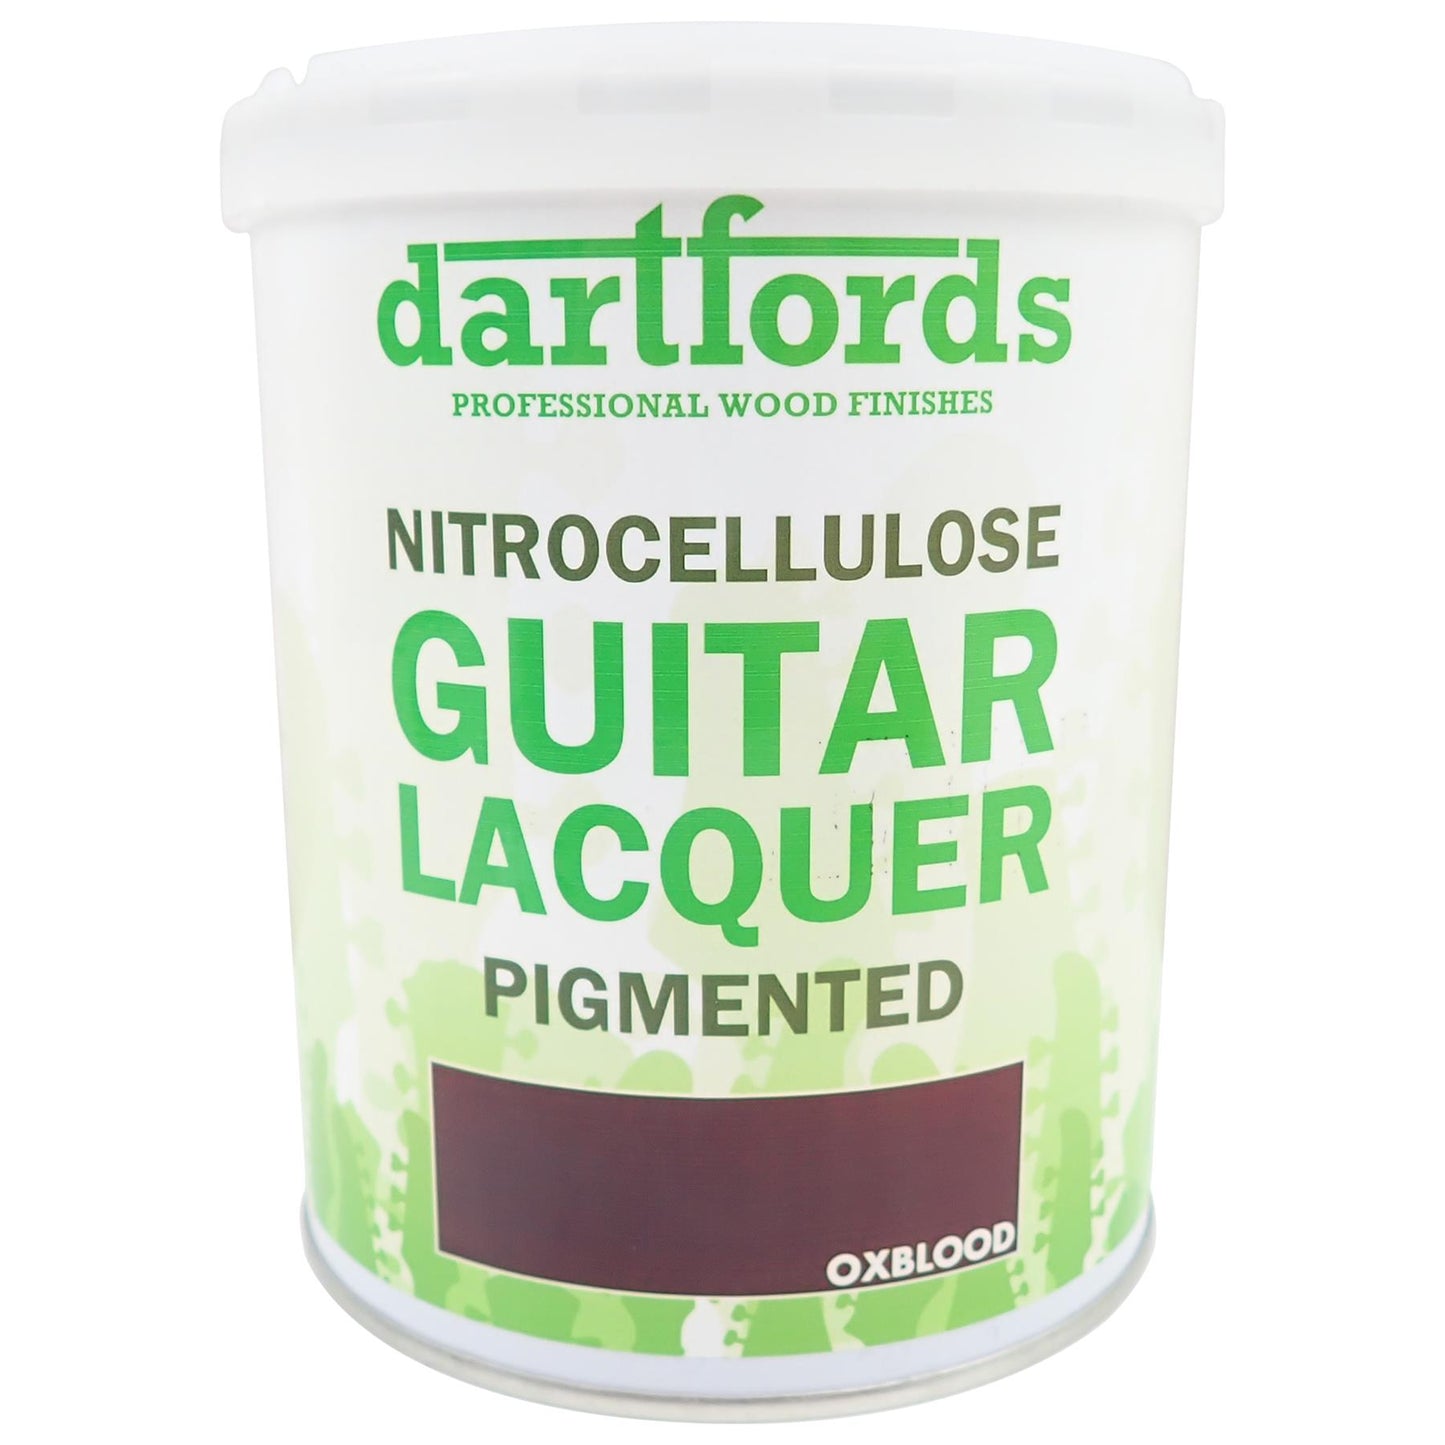 dartfords Oxblood Pigmented Nitrocellulose Guitar Lacquer - 1 litre Tin